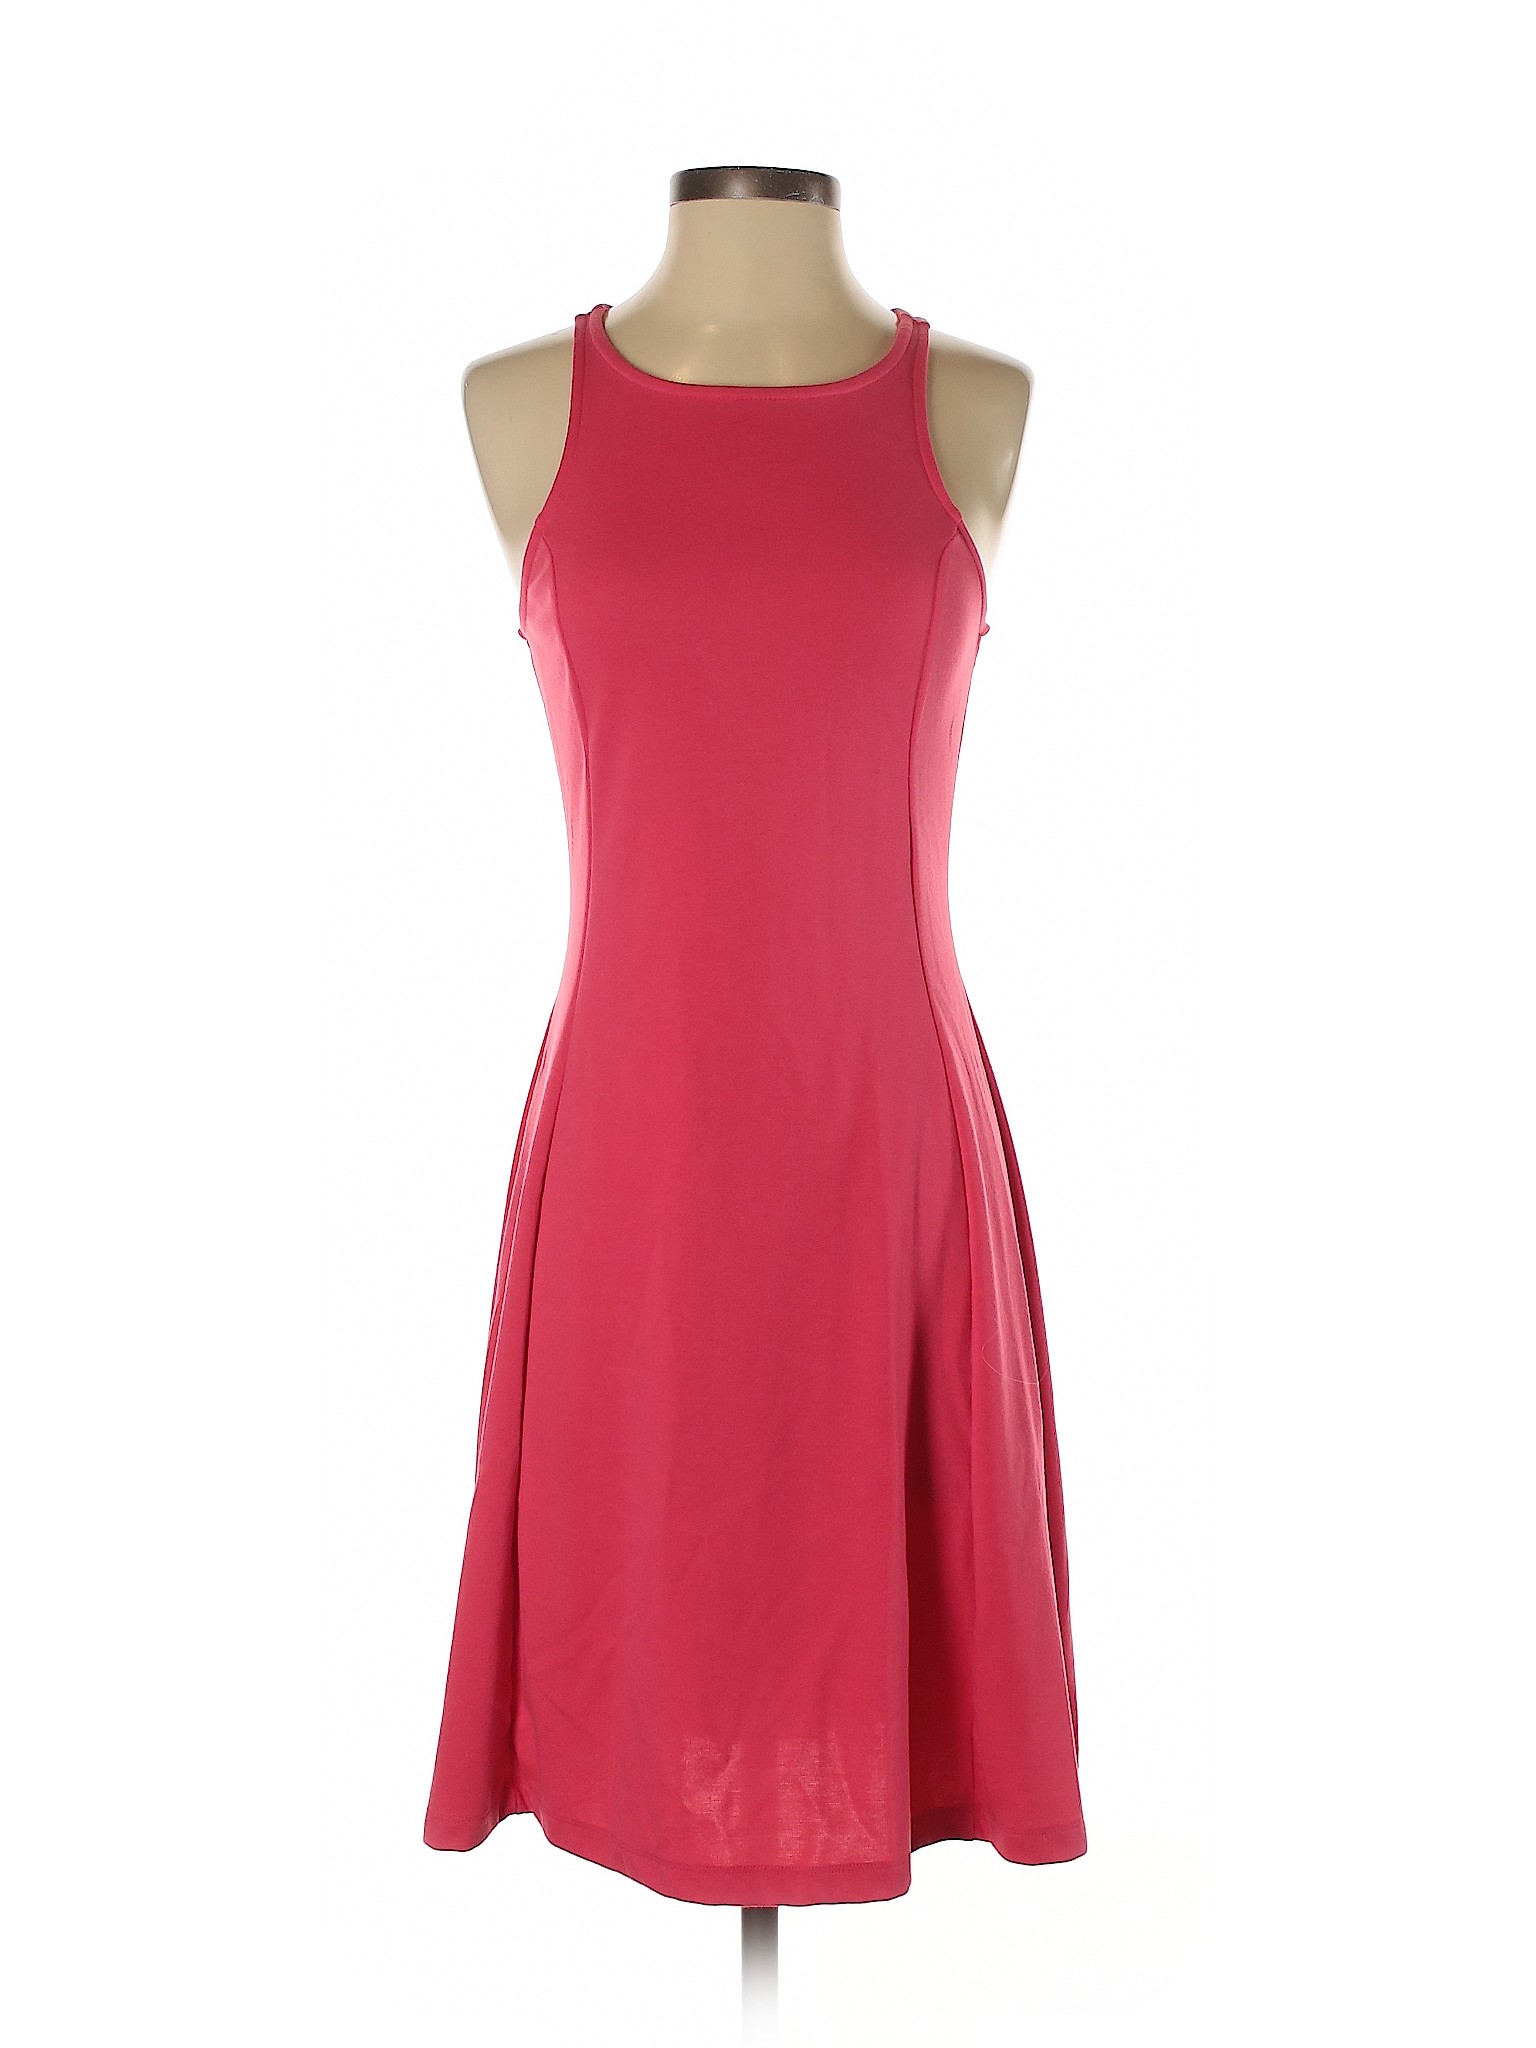 Old Navy Women Red Casual Dress S | eBay